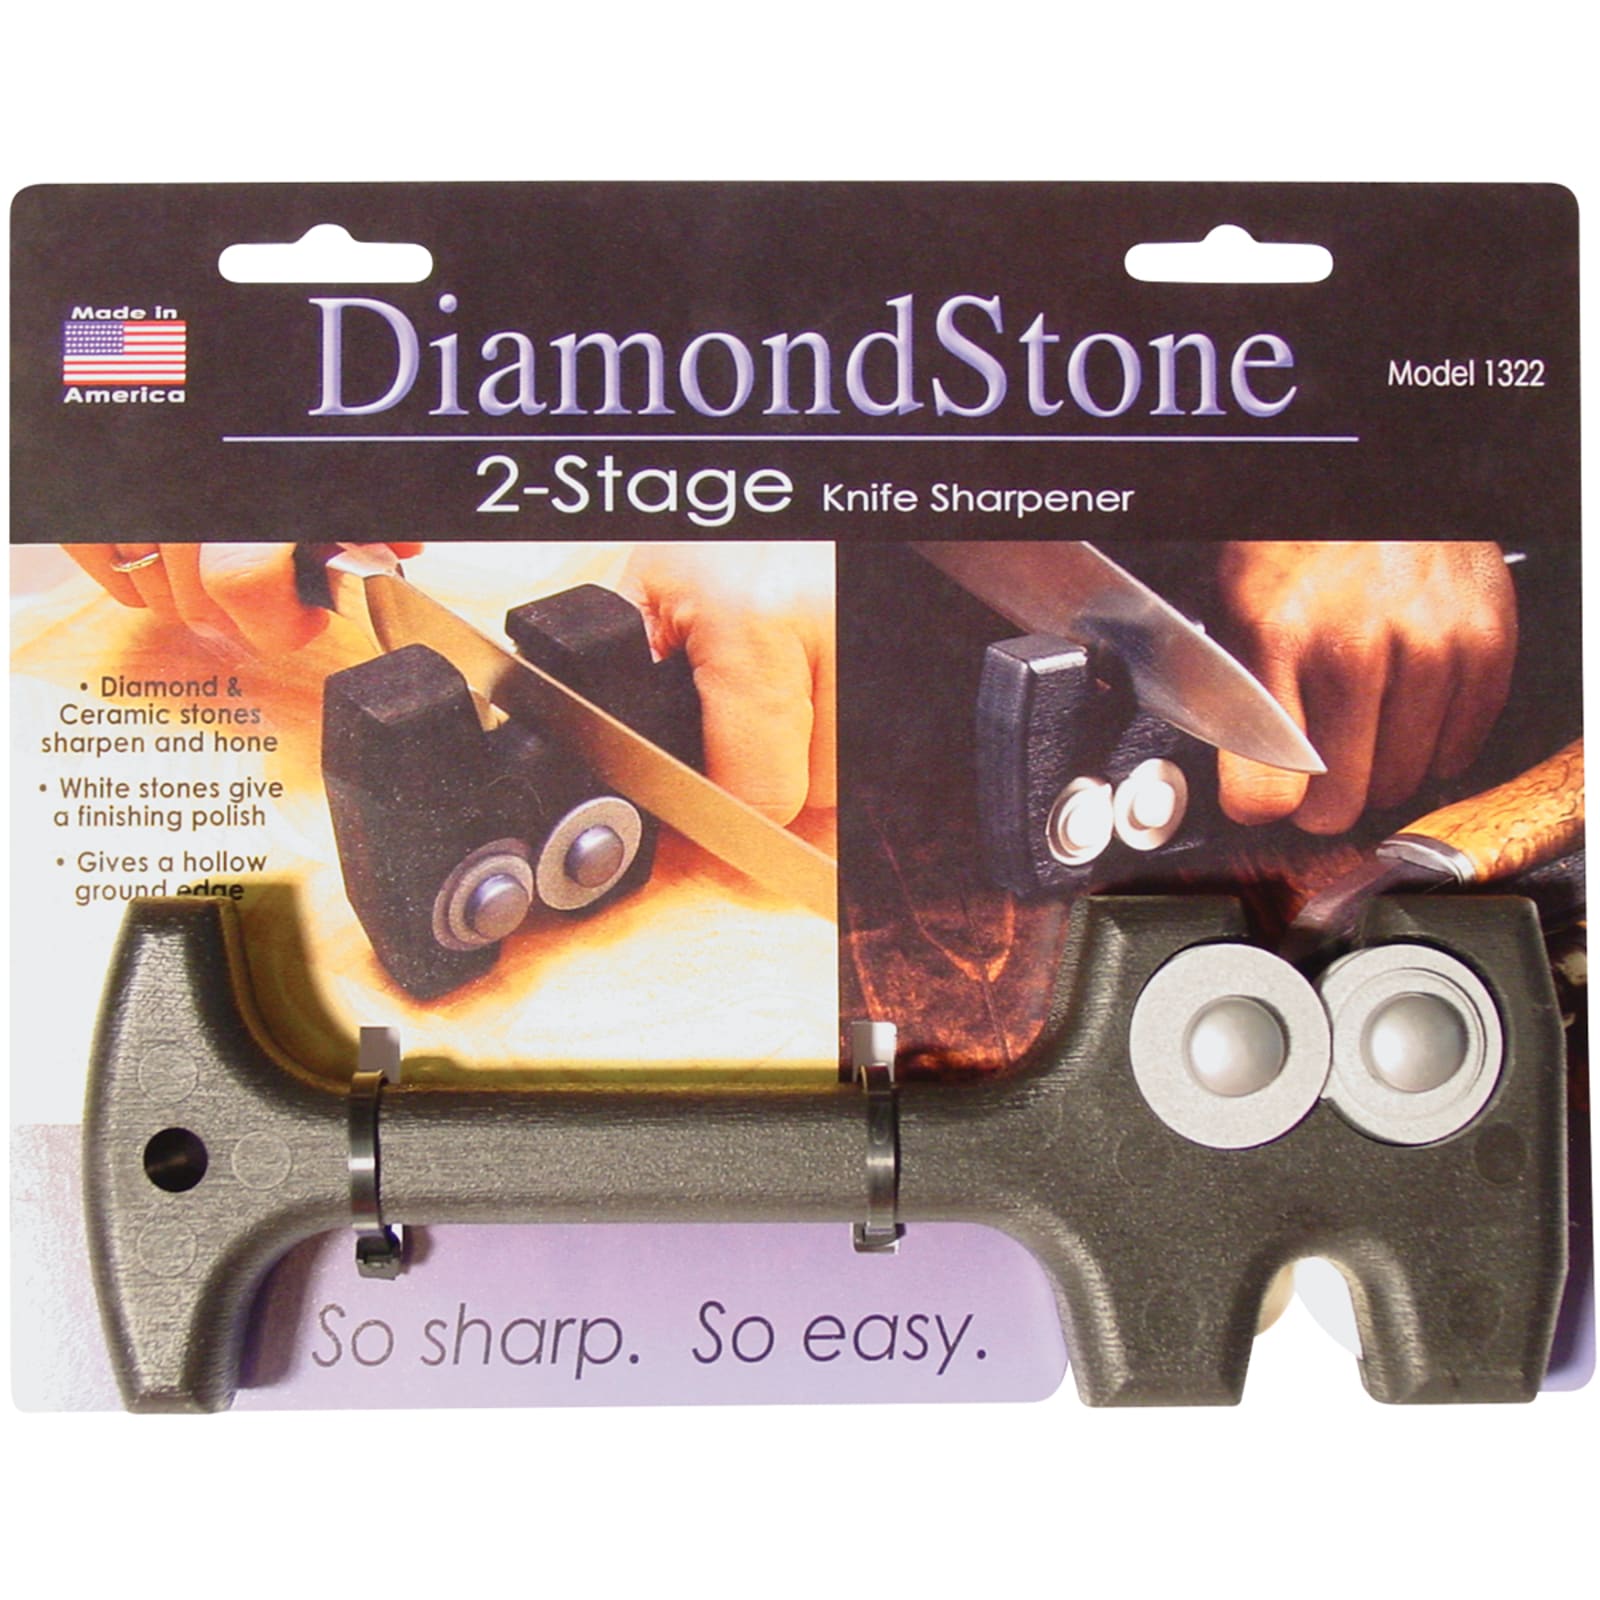 DiamondStone Electric Sharpener